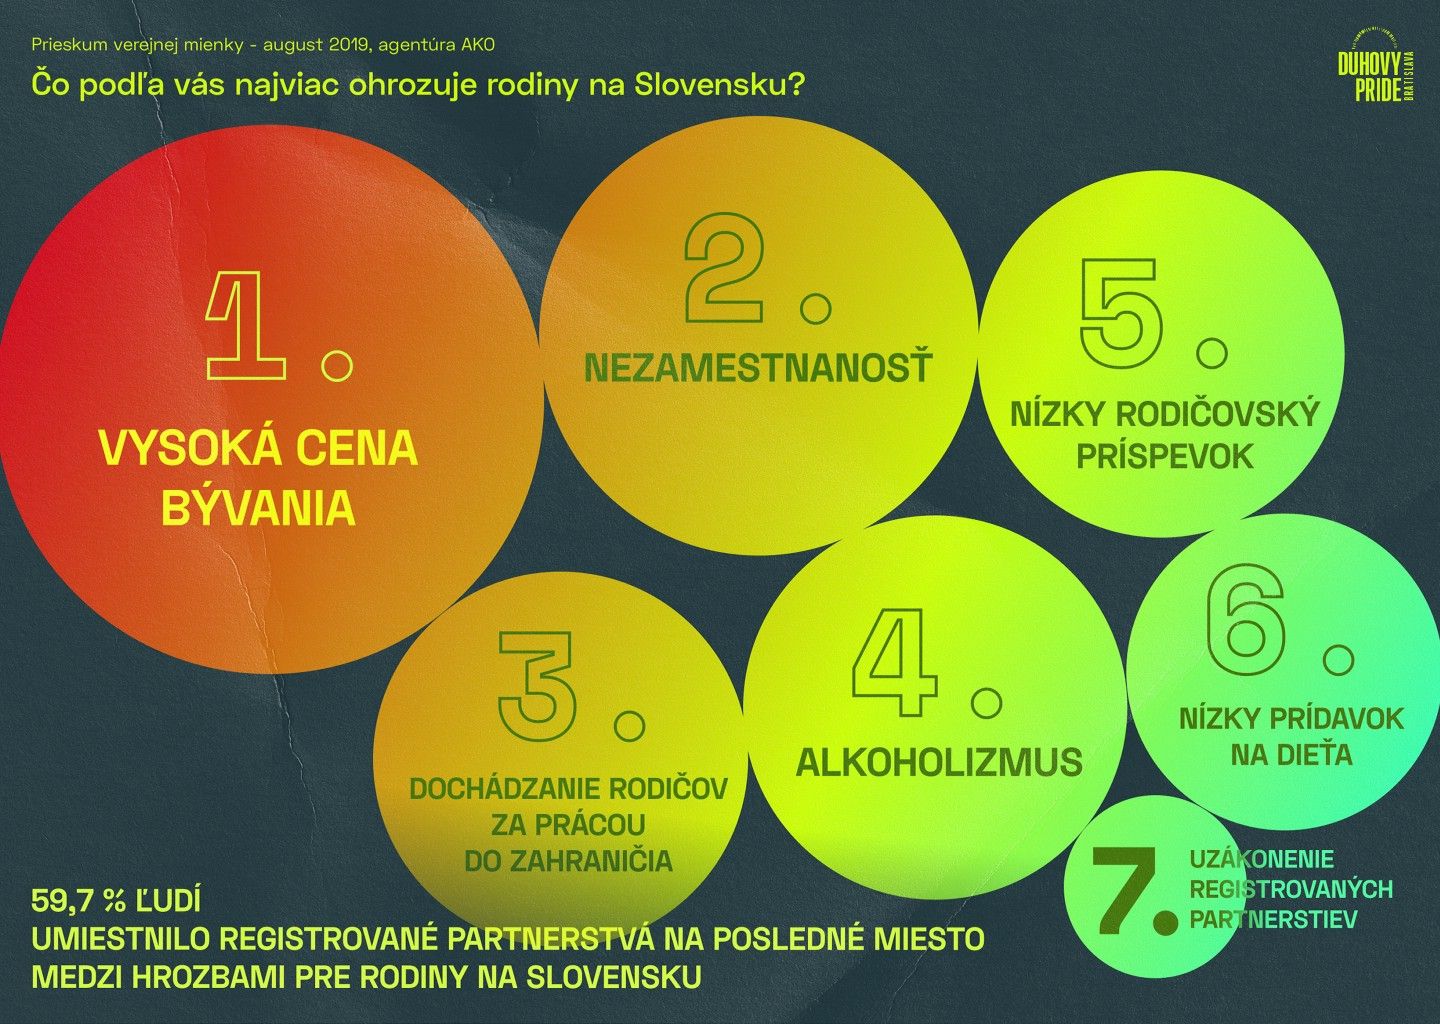 57 % Slovákov podporuje životné partnerstvá bez ohľadu na pohlavie